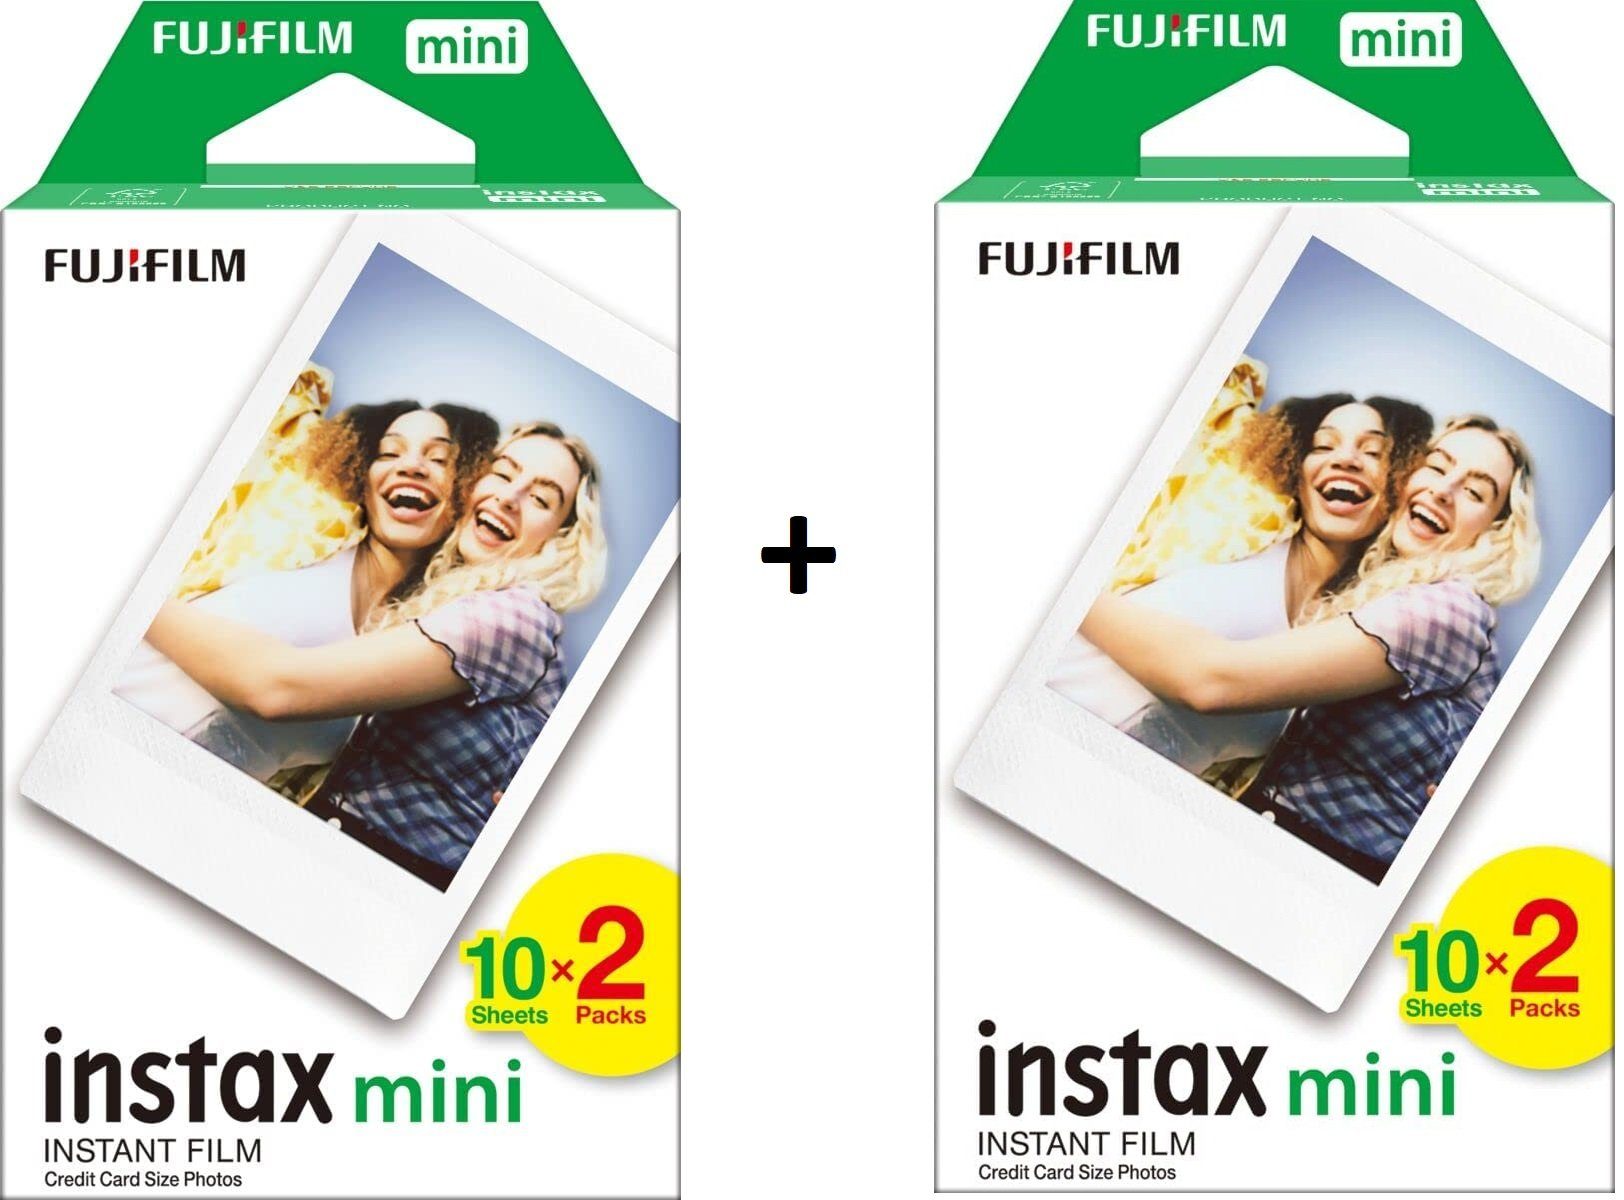 Fujifilm INSTAX Mini Film 40 Fotos für Mini 7s, 8, 9, 11, 25, 70, 90 Sofortbildkamera